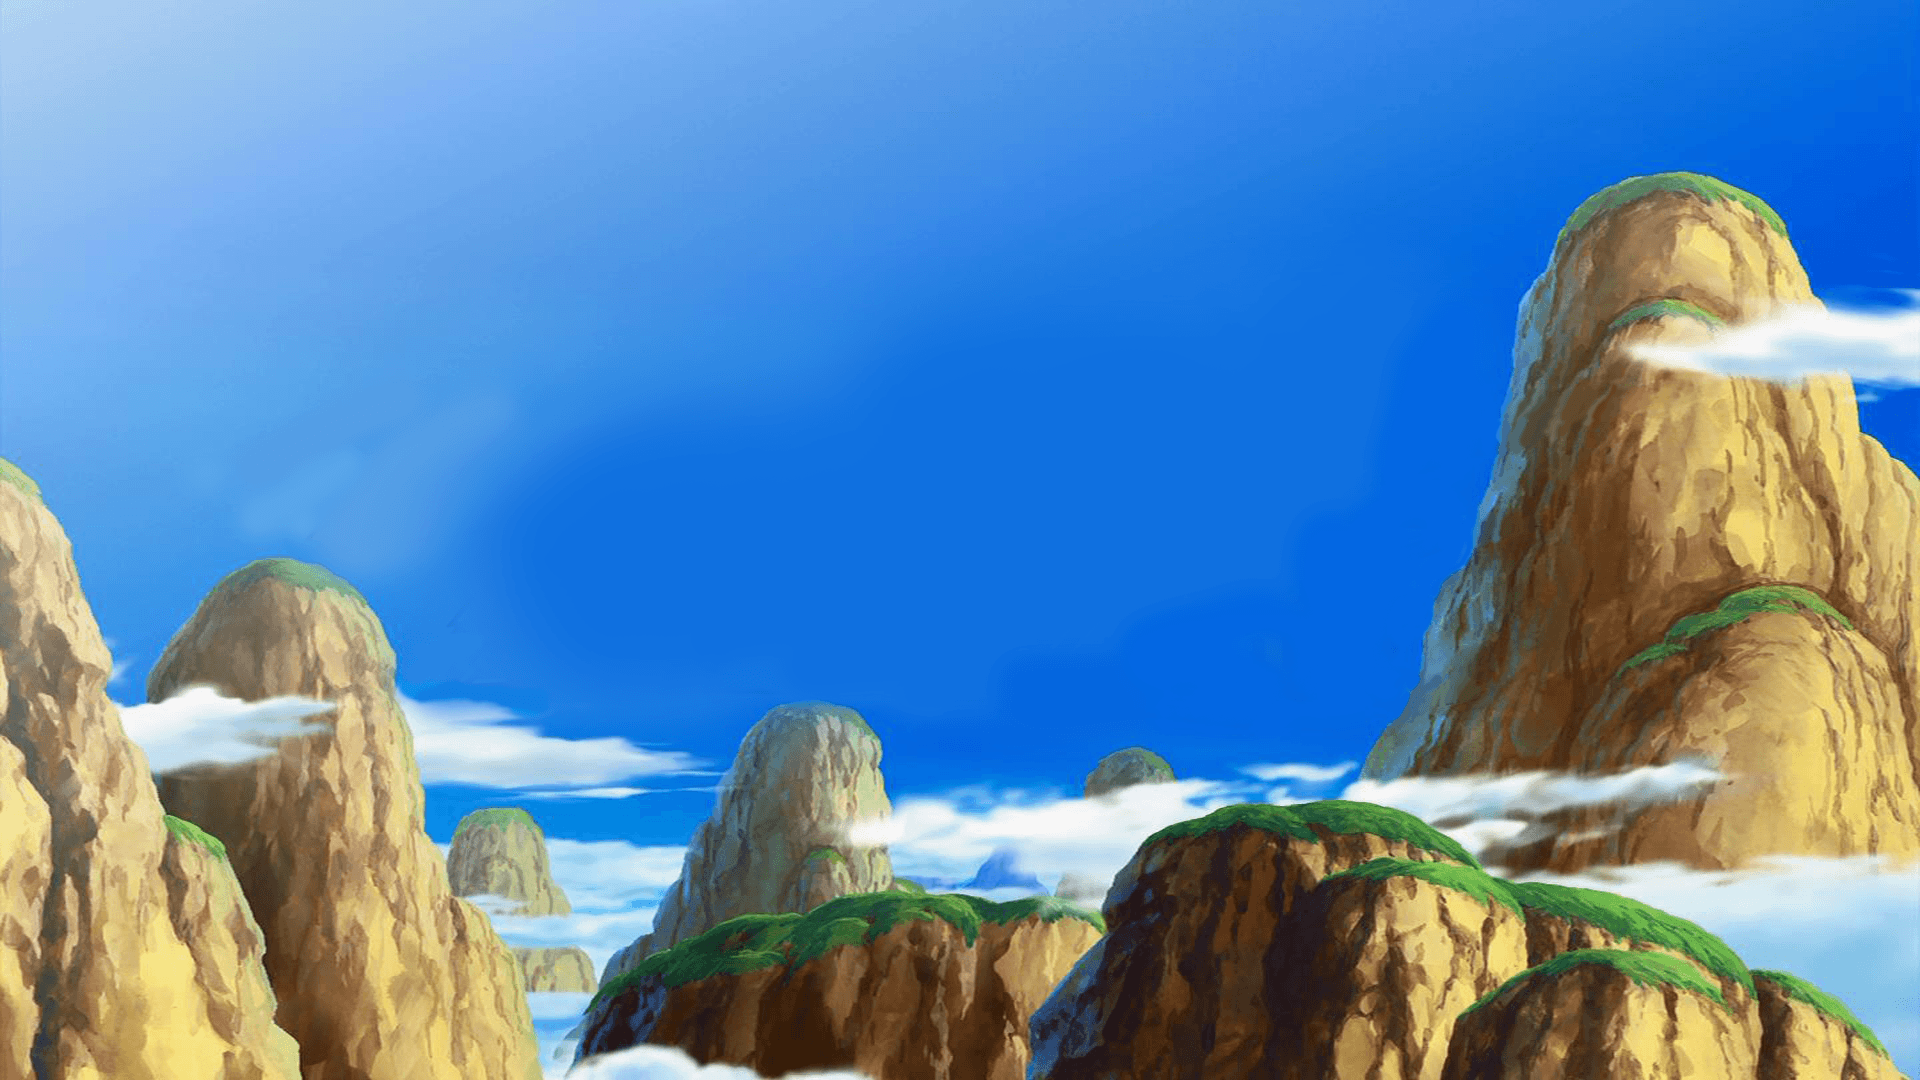 Dragon Ball Landscape Wallpapers